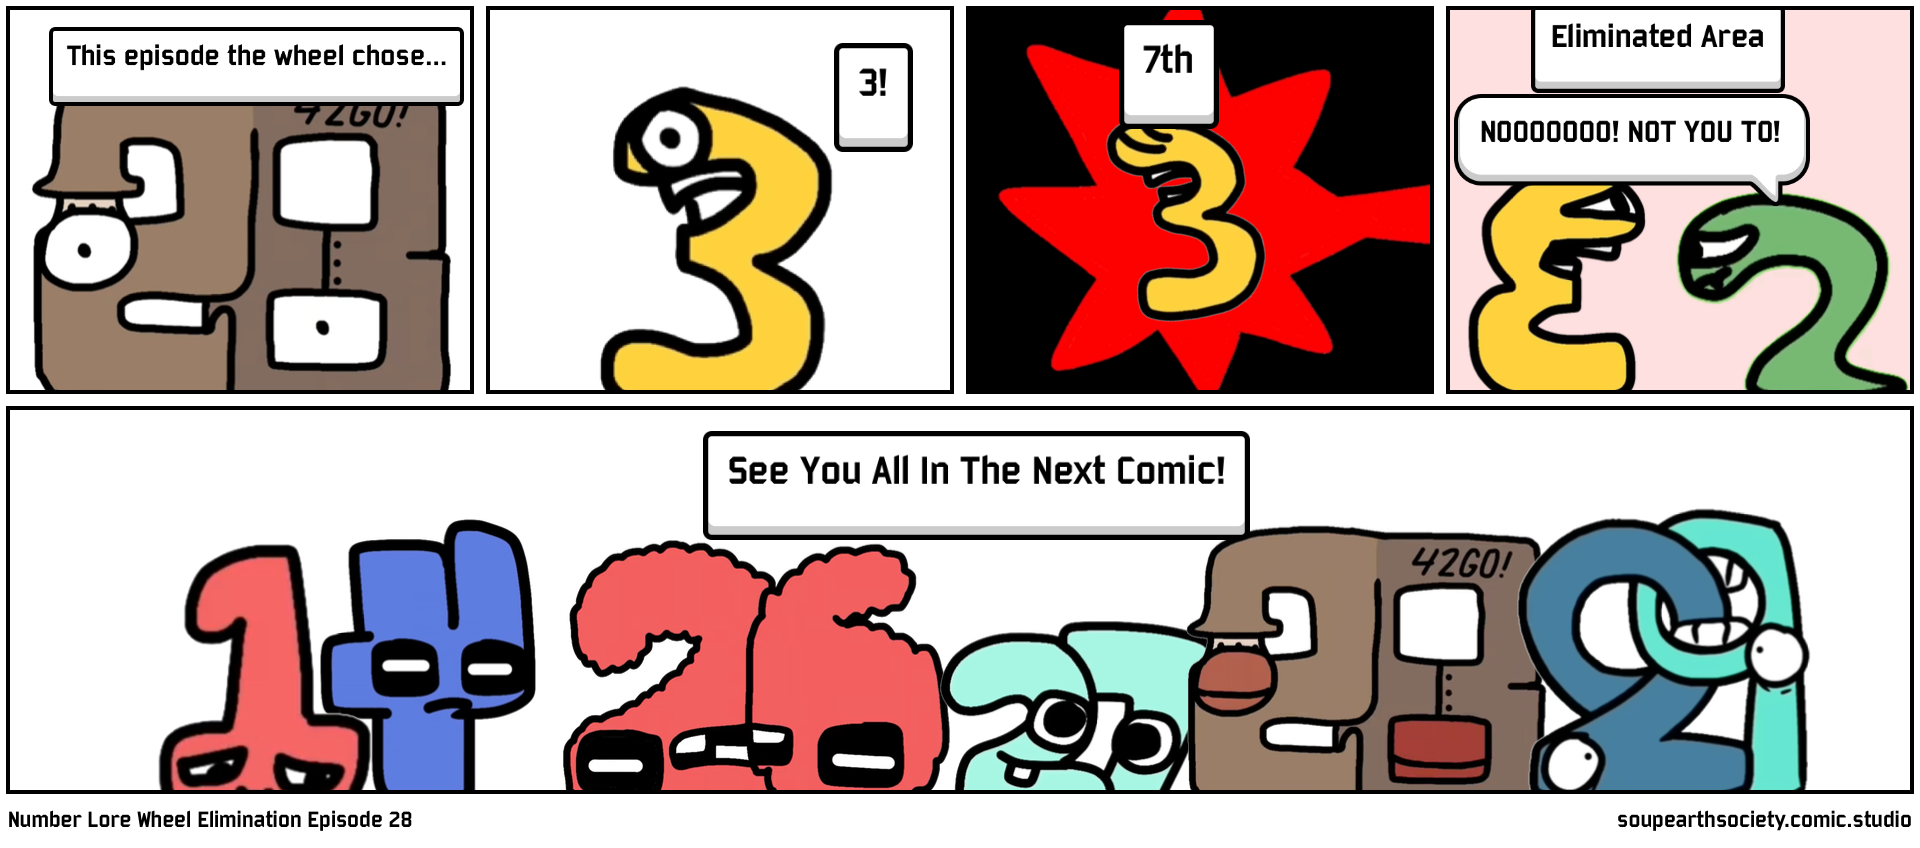 Number Lore Wheel Elimination Episode 28 - Comic Studio